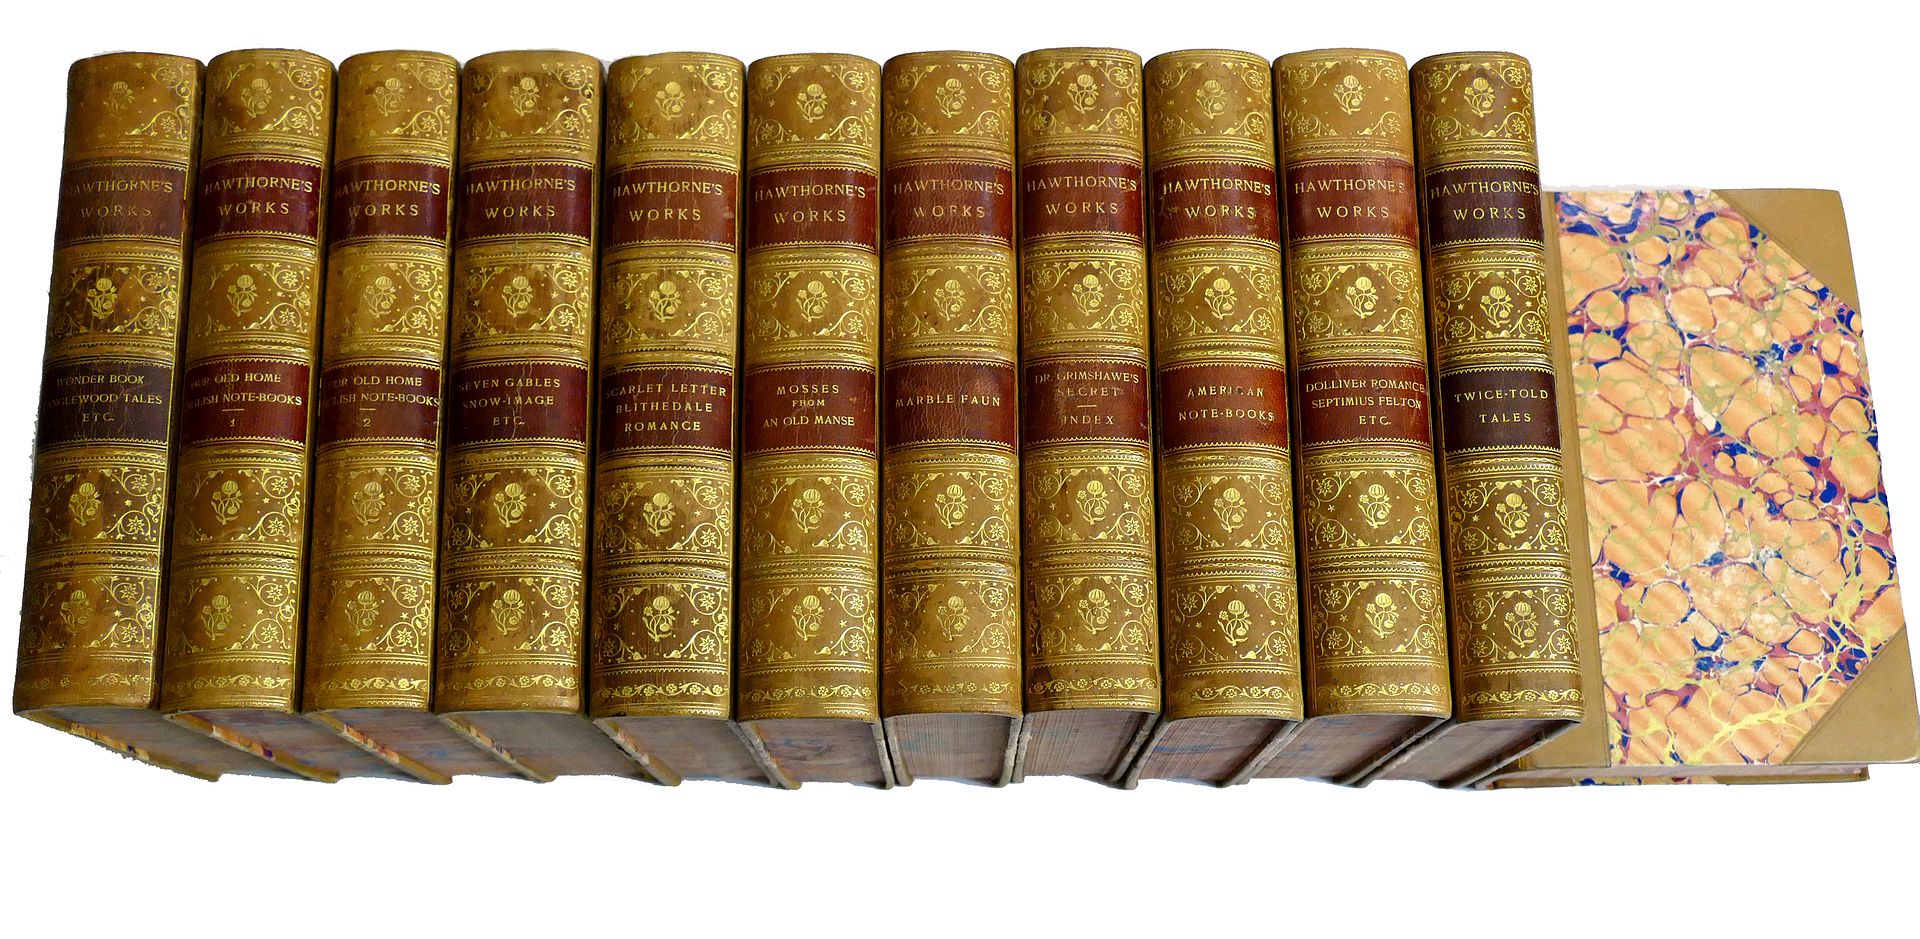 NATHANIEL HAWTHORNE - Complete Works of Nathaniel Hawthorne 12 Volumes